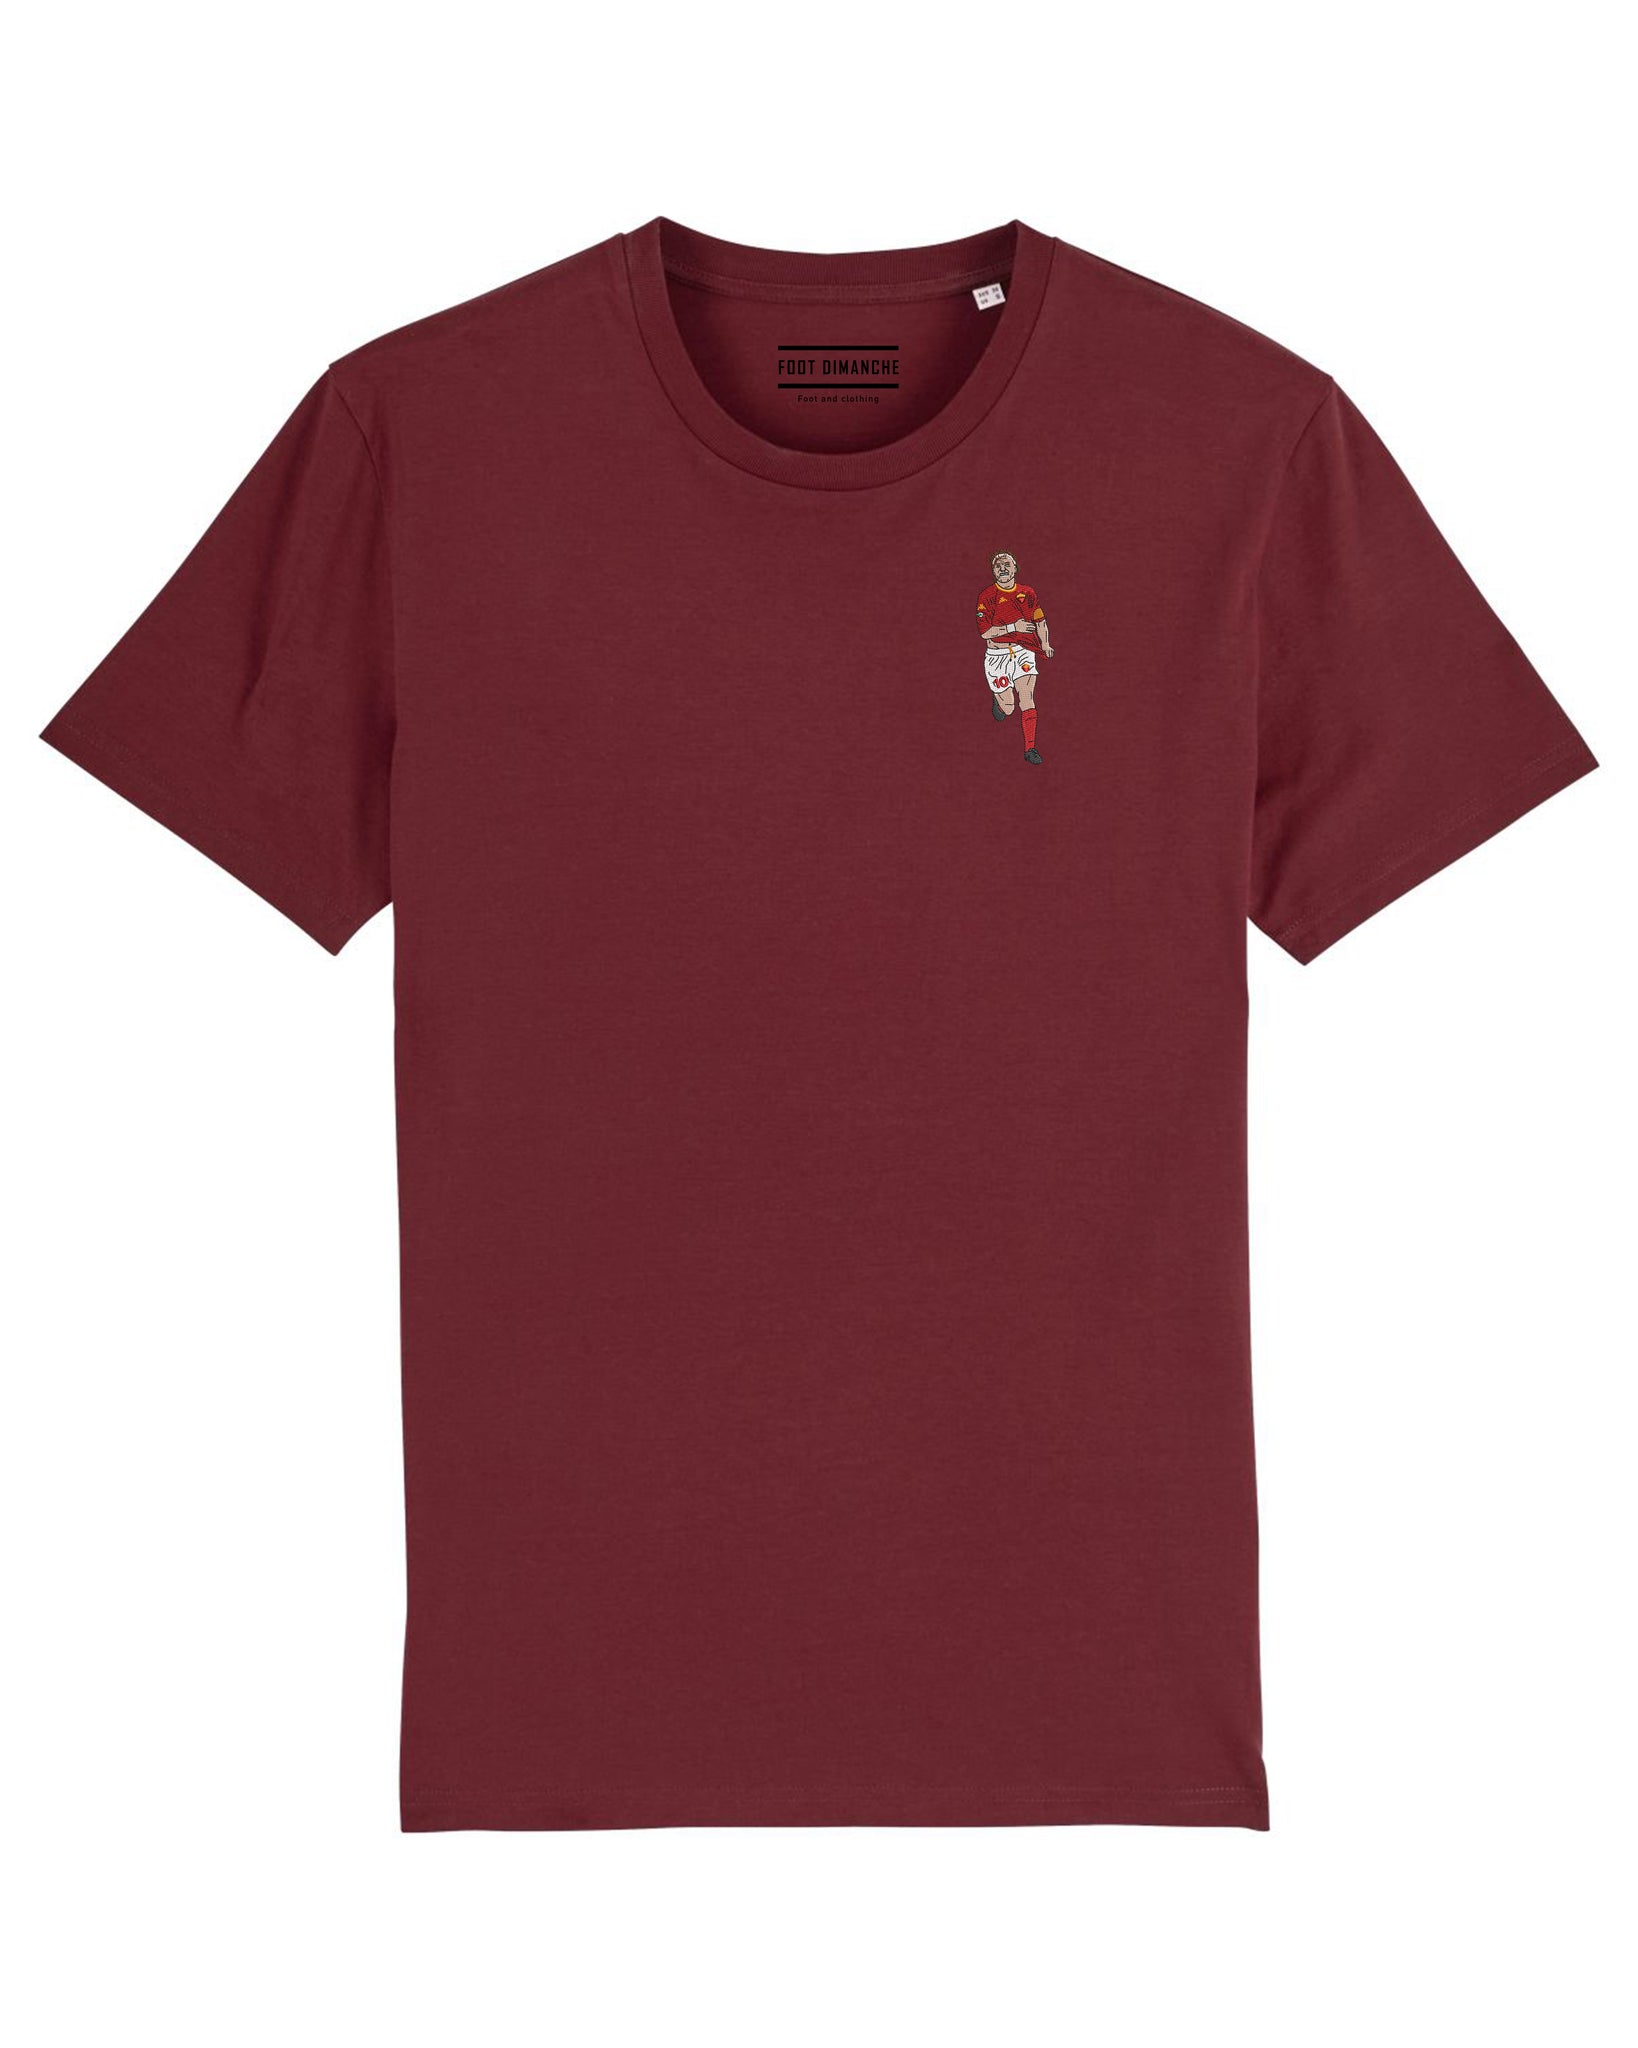 Tee Shirt Totti 2001 brodé